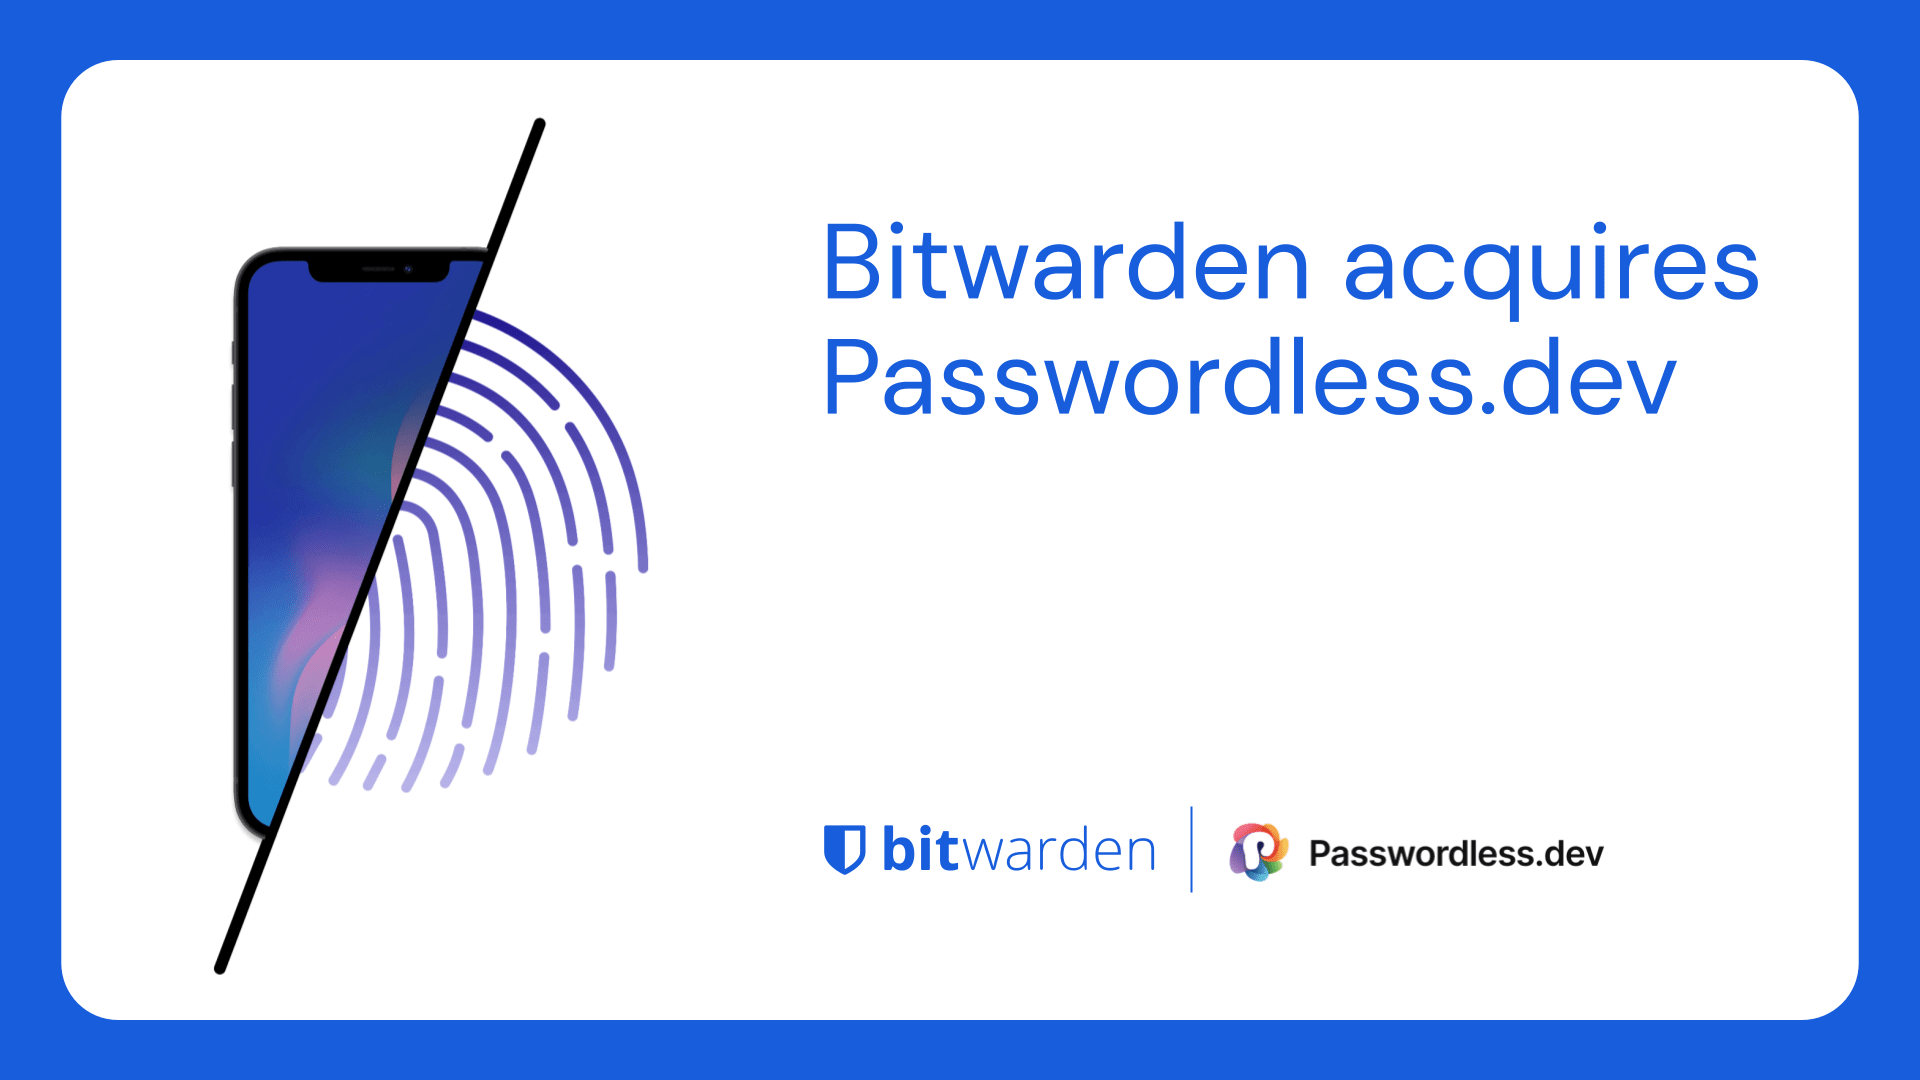 Bitwarden acquires Passwordless.dev